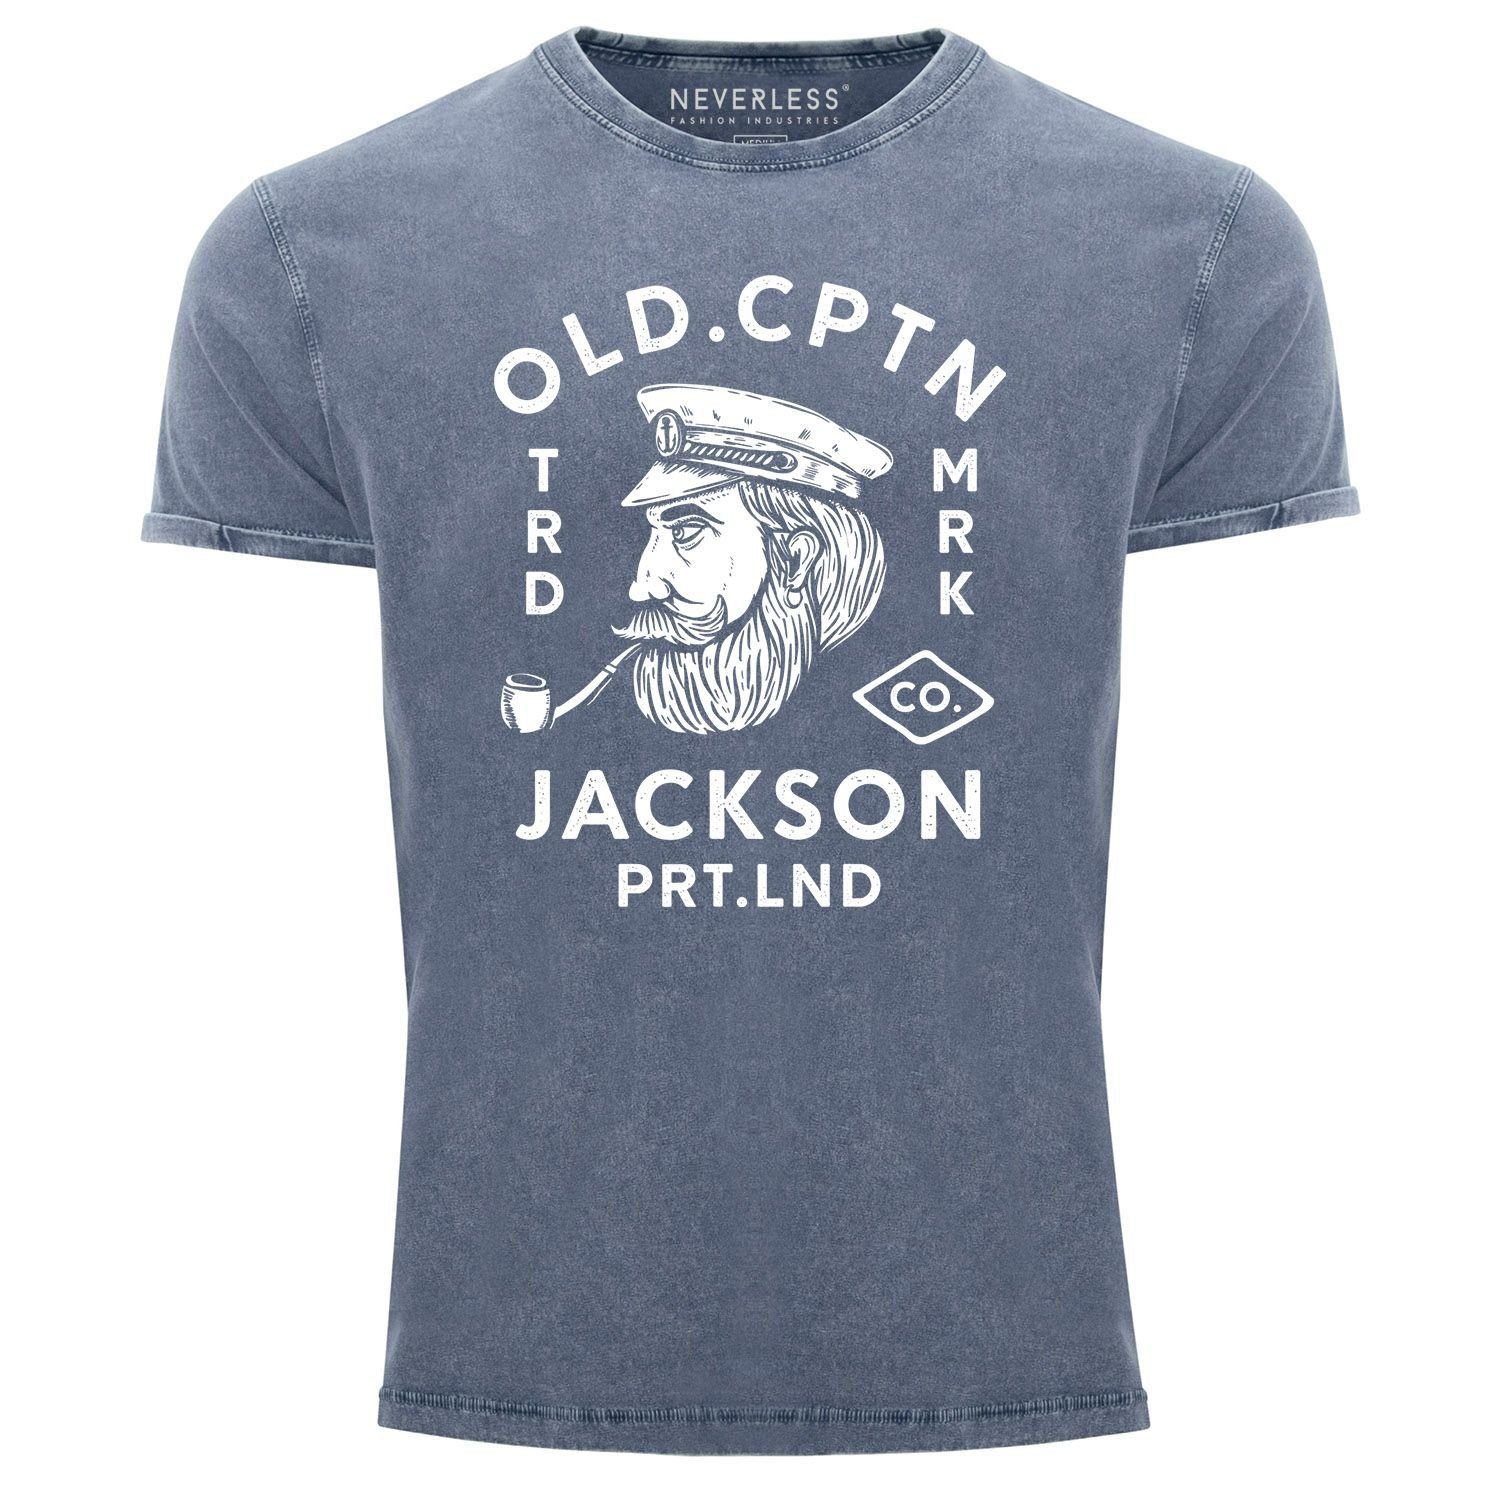 Neverless Print-Shirt Herren Vintage Shirt Kapitän Motiv Aufdruck Old Cptn Jackson Retro Printshirt Used Look Slim Fit Neverless® mit Print blau